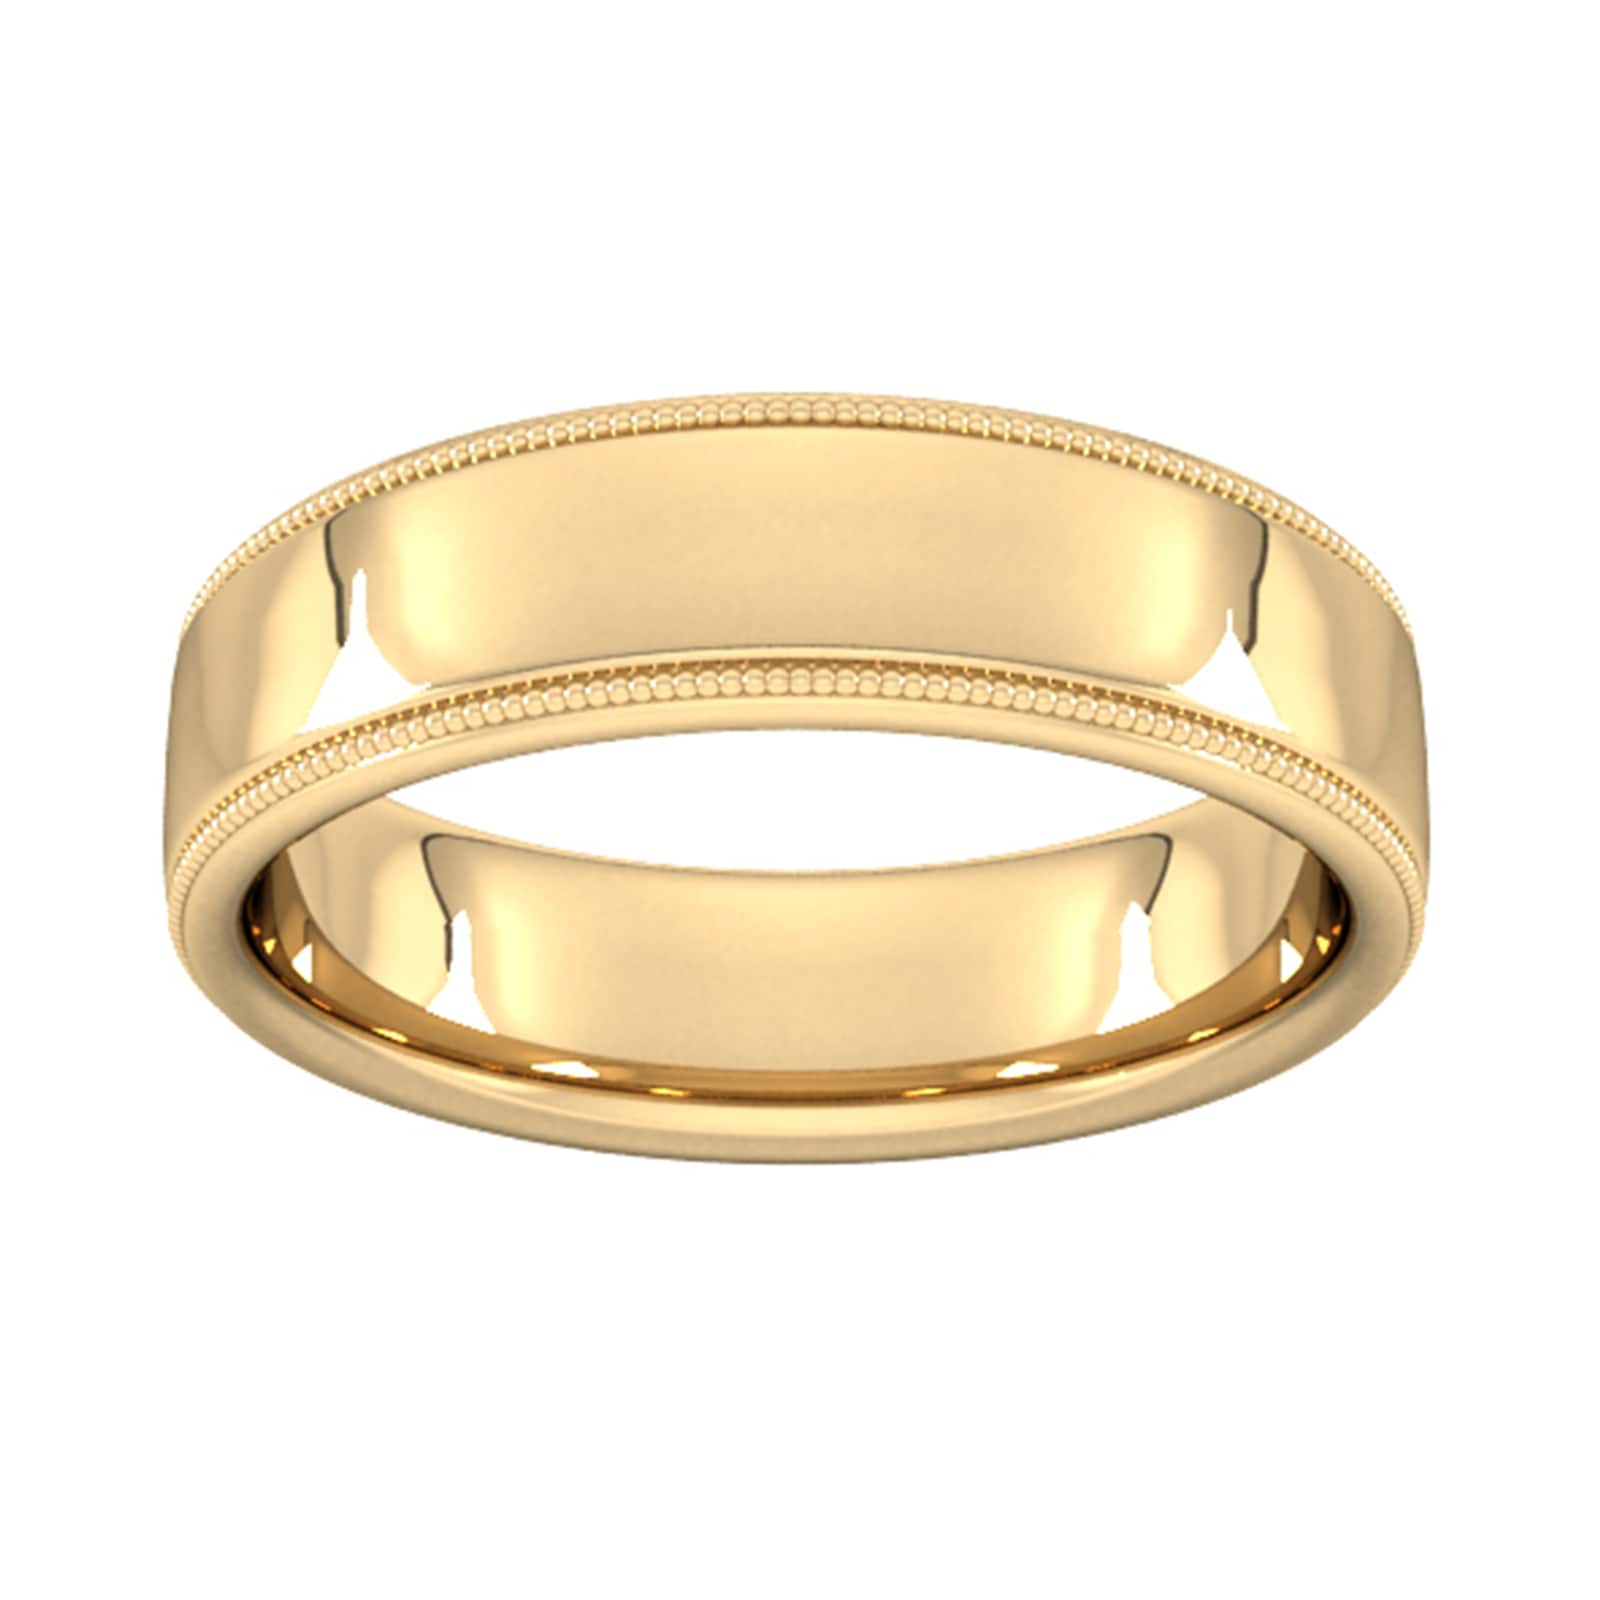 6mm Slight Court Heavy Milgrain Edge Wedding Ring In 18 Carat Yellow Gold - Ring Size L